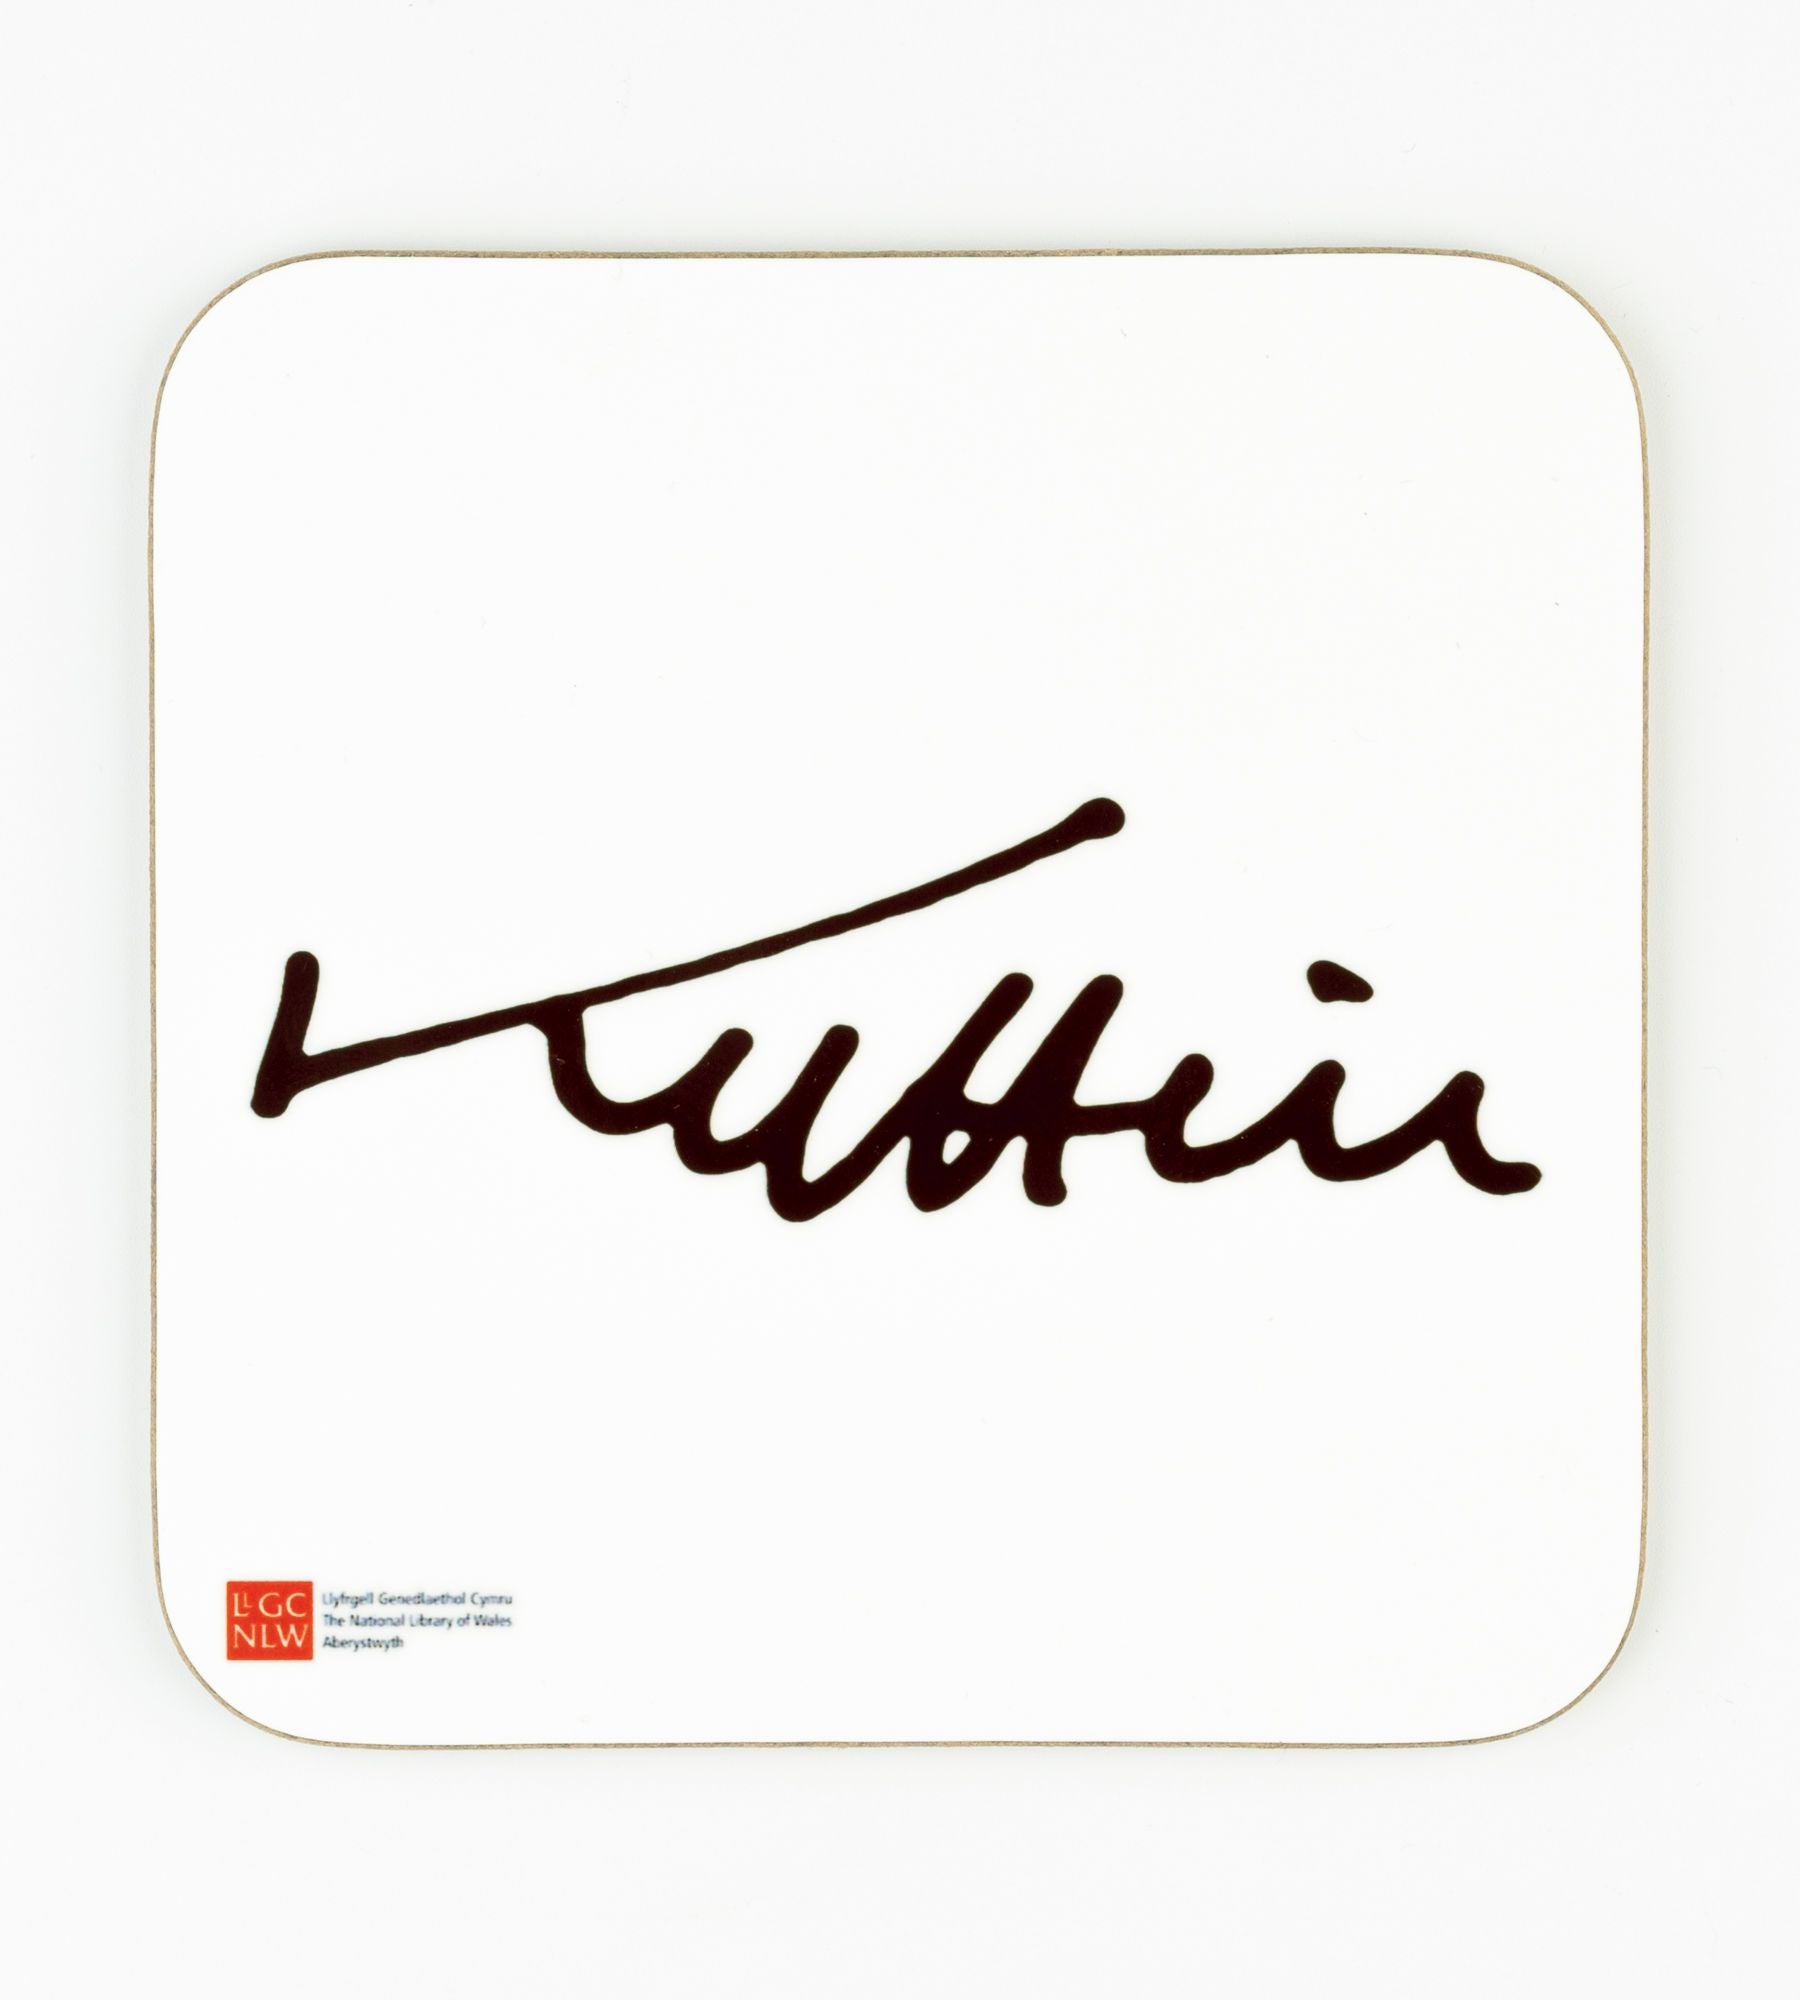 Sir Kyffin Williams signature - Coaster